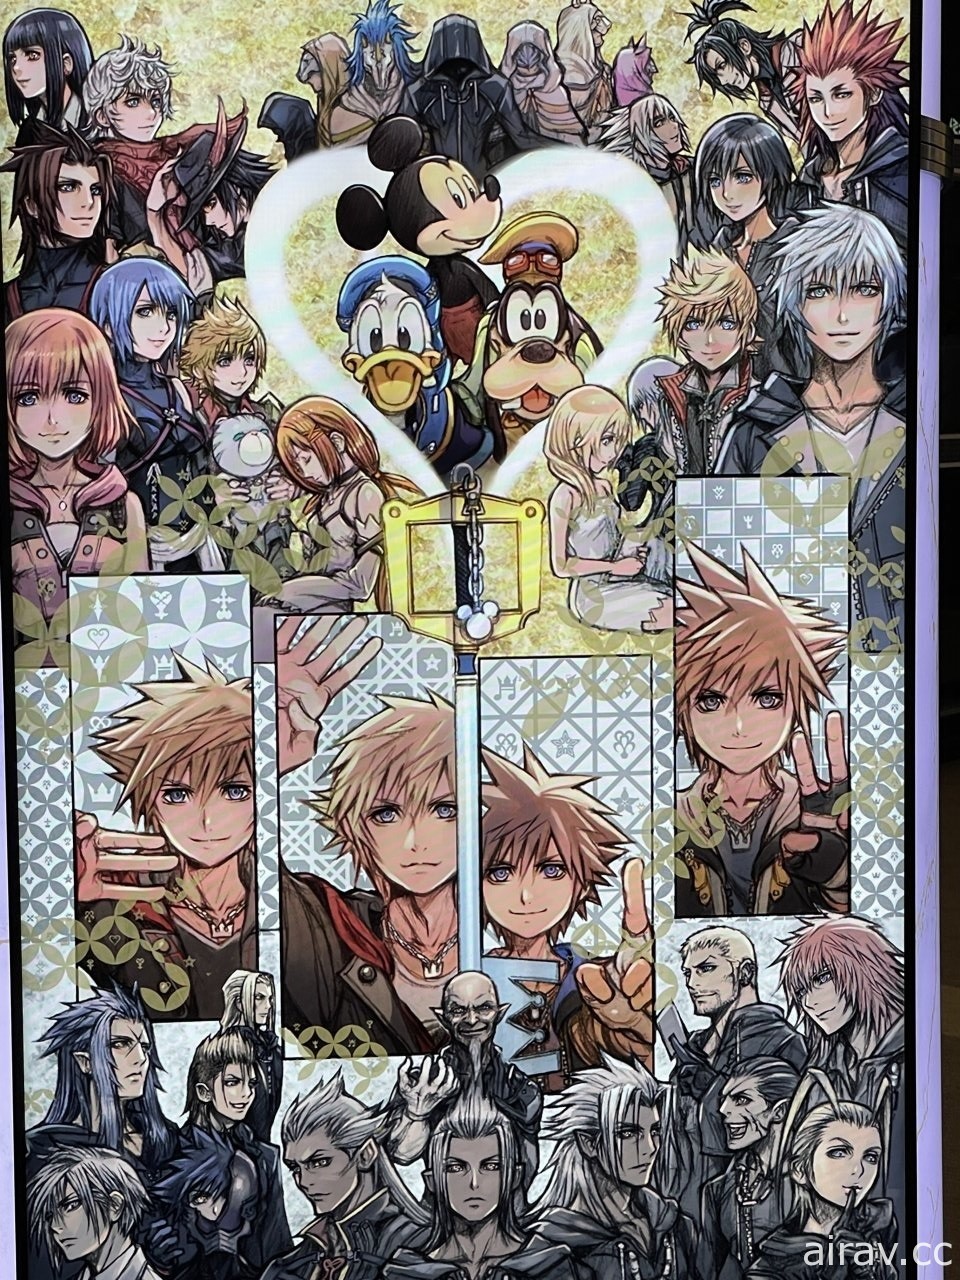 《王國之心》系列新作發表會「Kingdom Hearts 20th Anniversary Event」活動報導